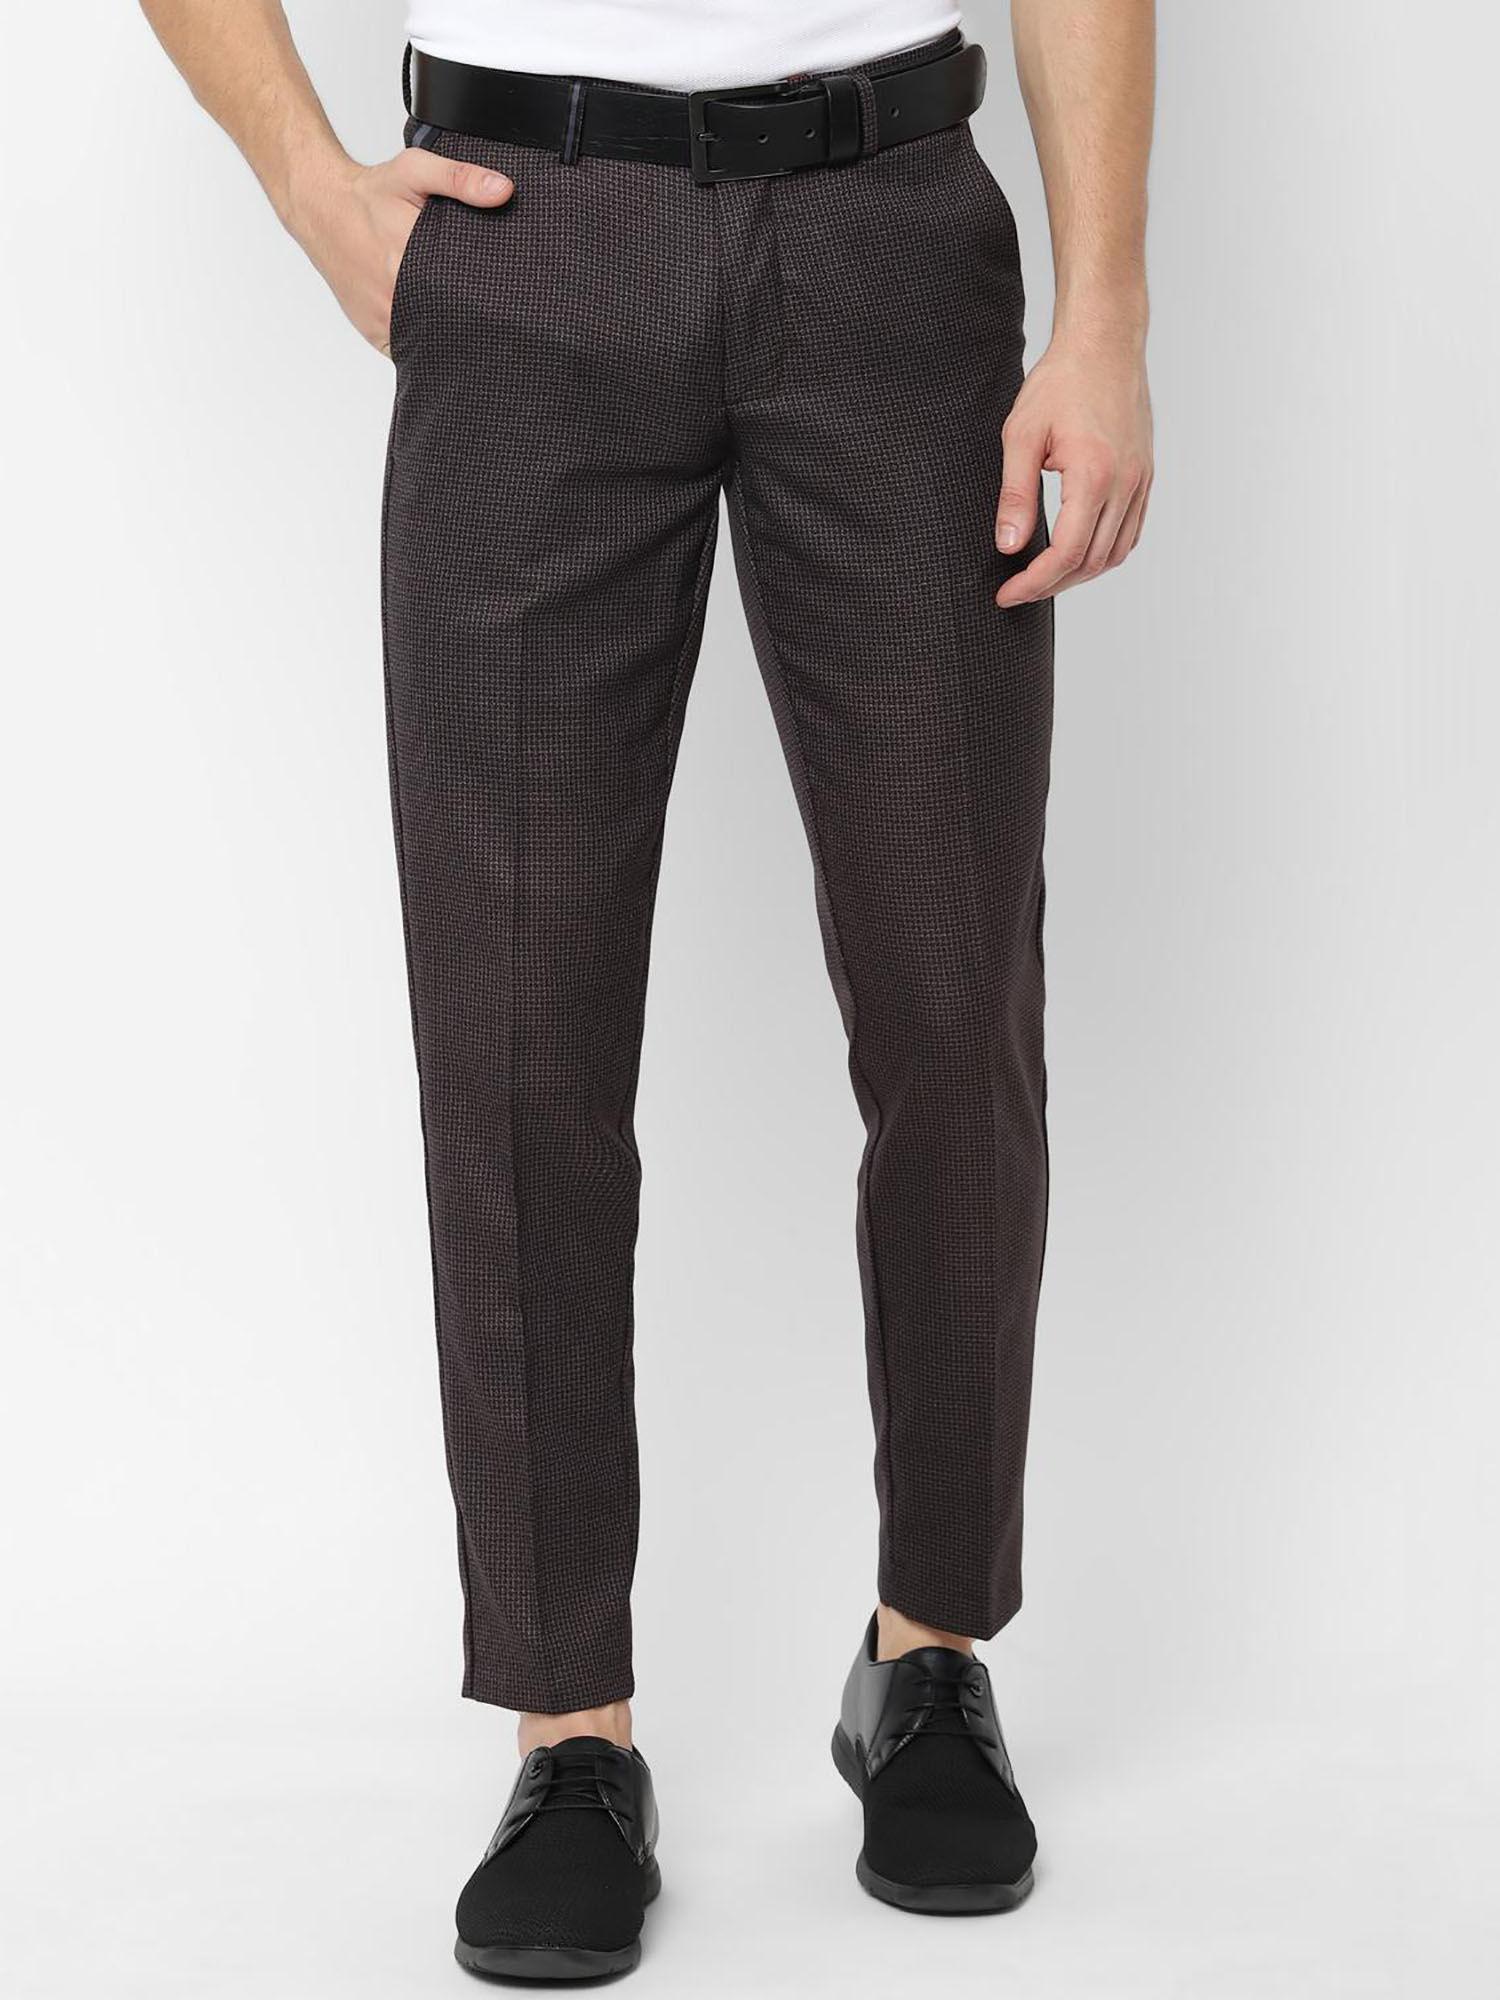 brown-self-designed-mid-waist-trouser